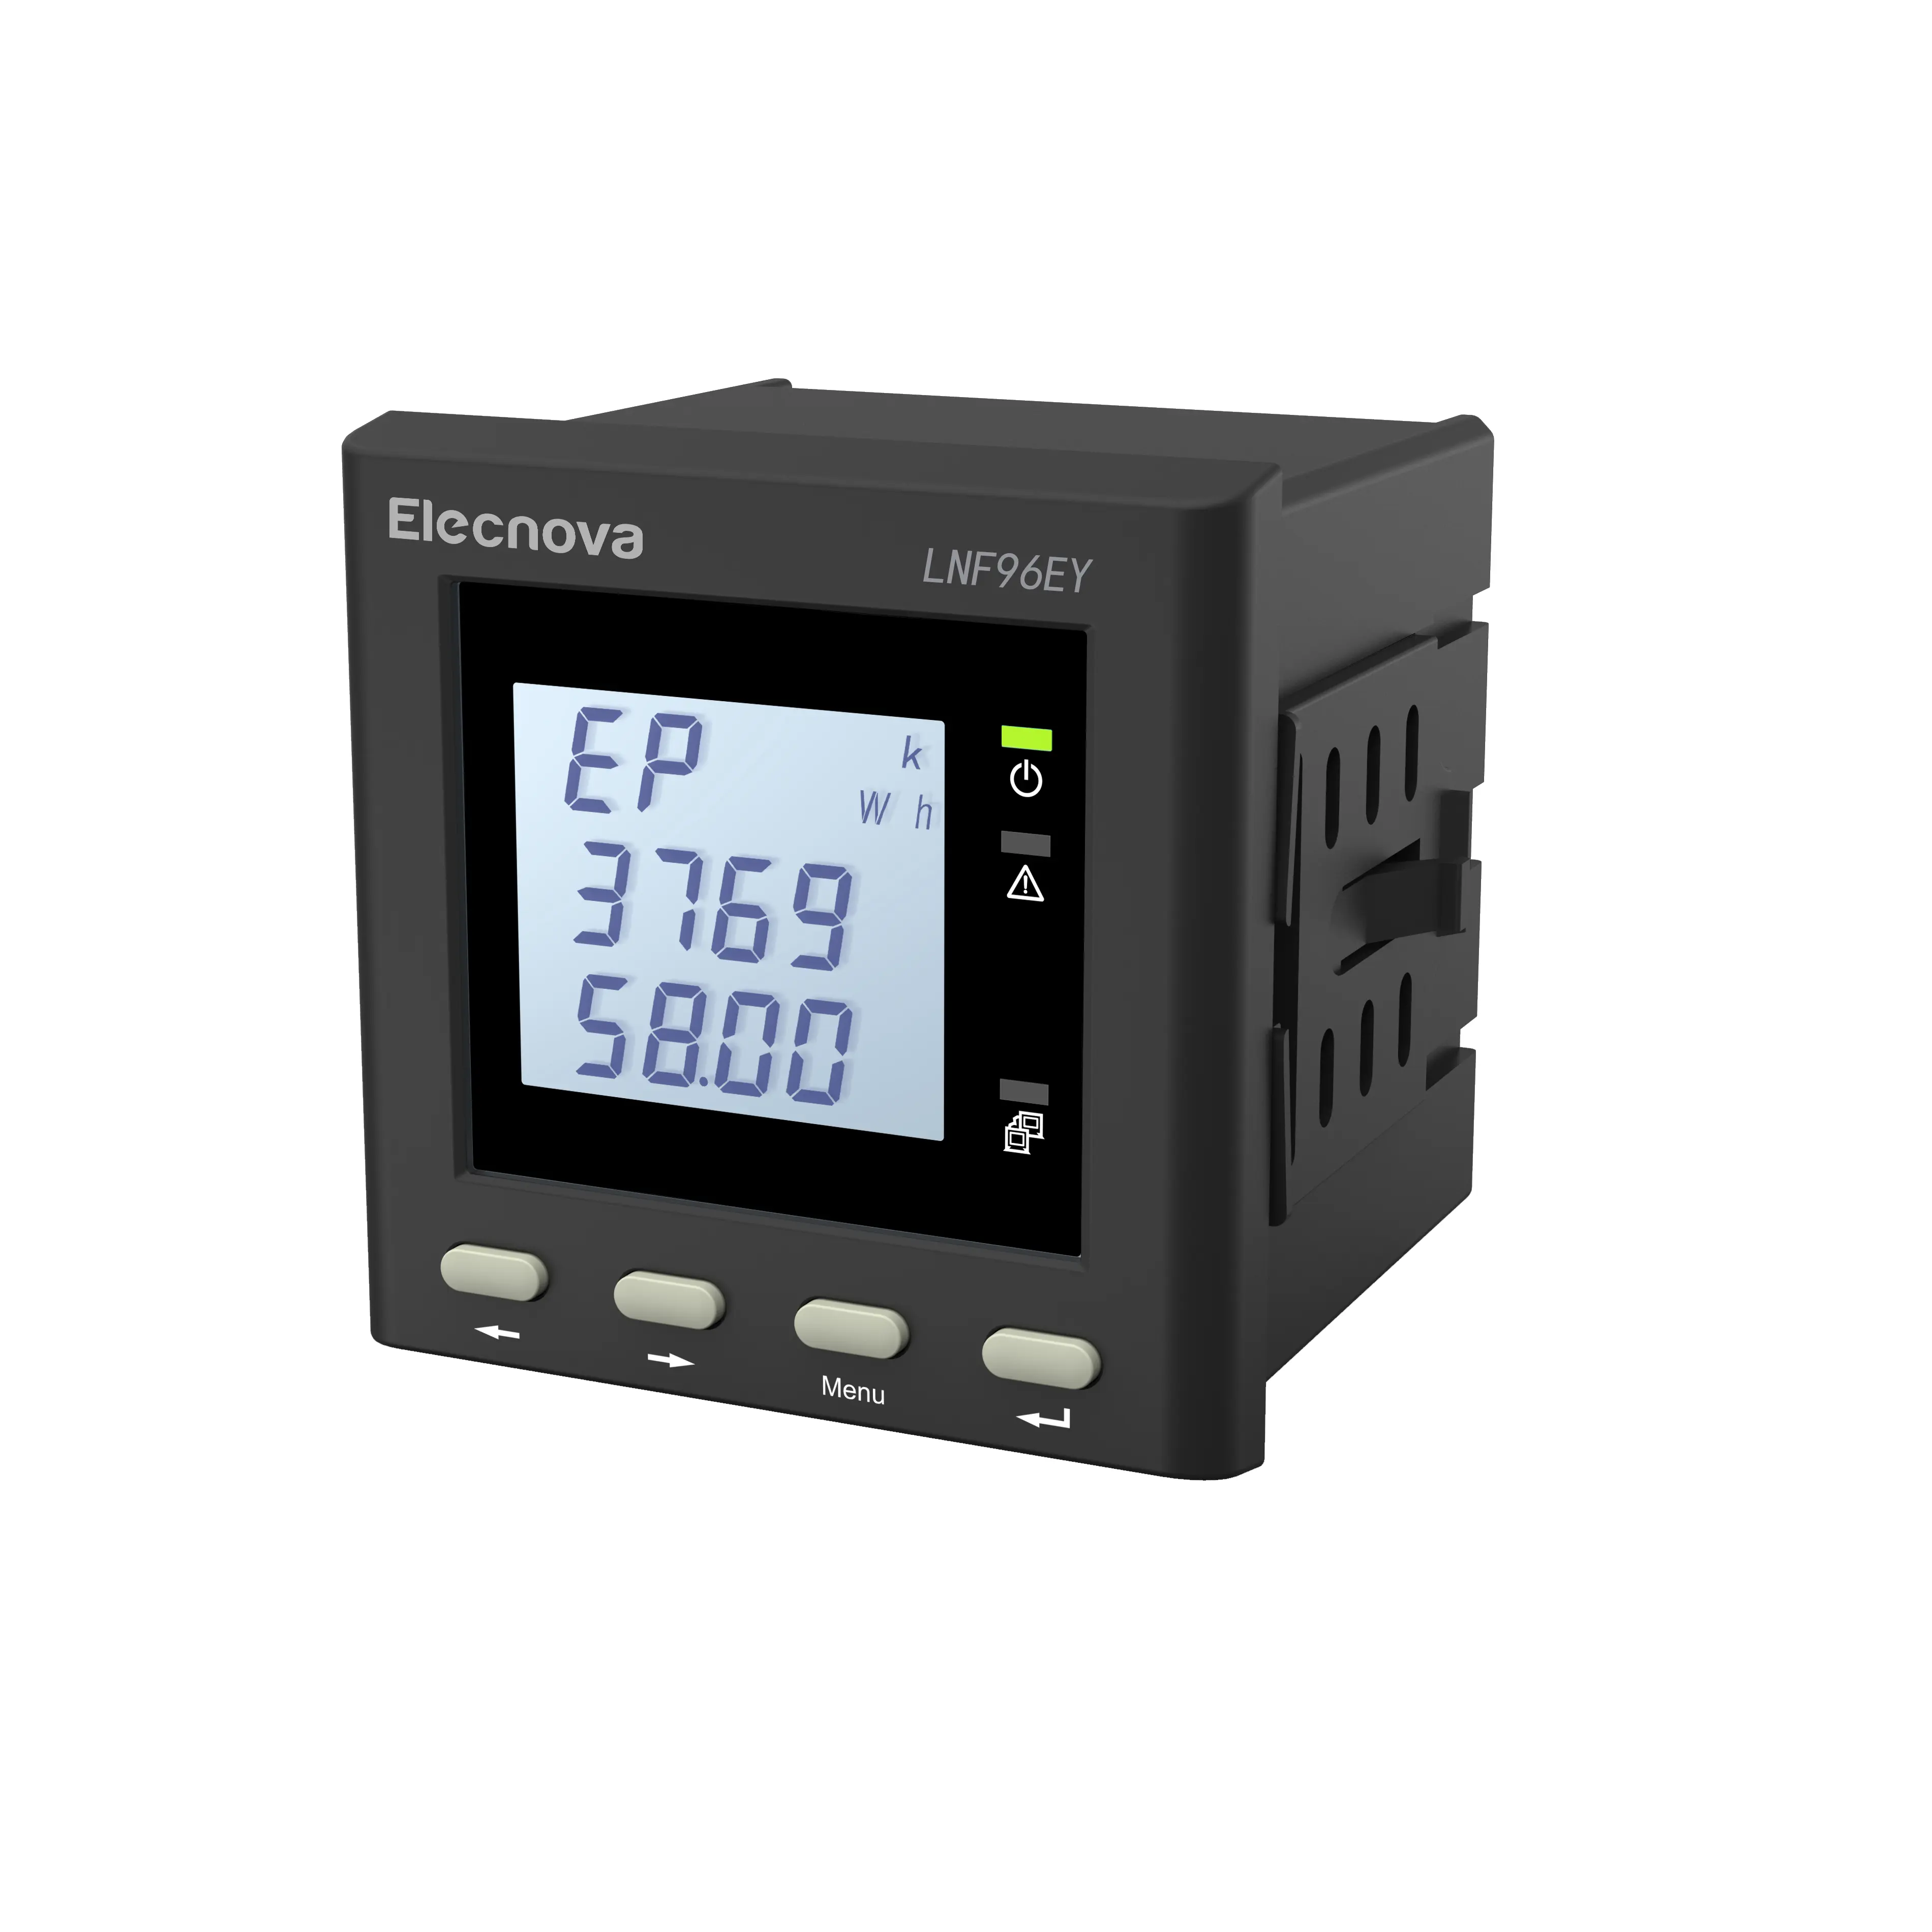 Elecnova basic measuring 3 phase LCD display 96*96 cheap feeder multi function power meter